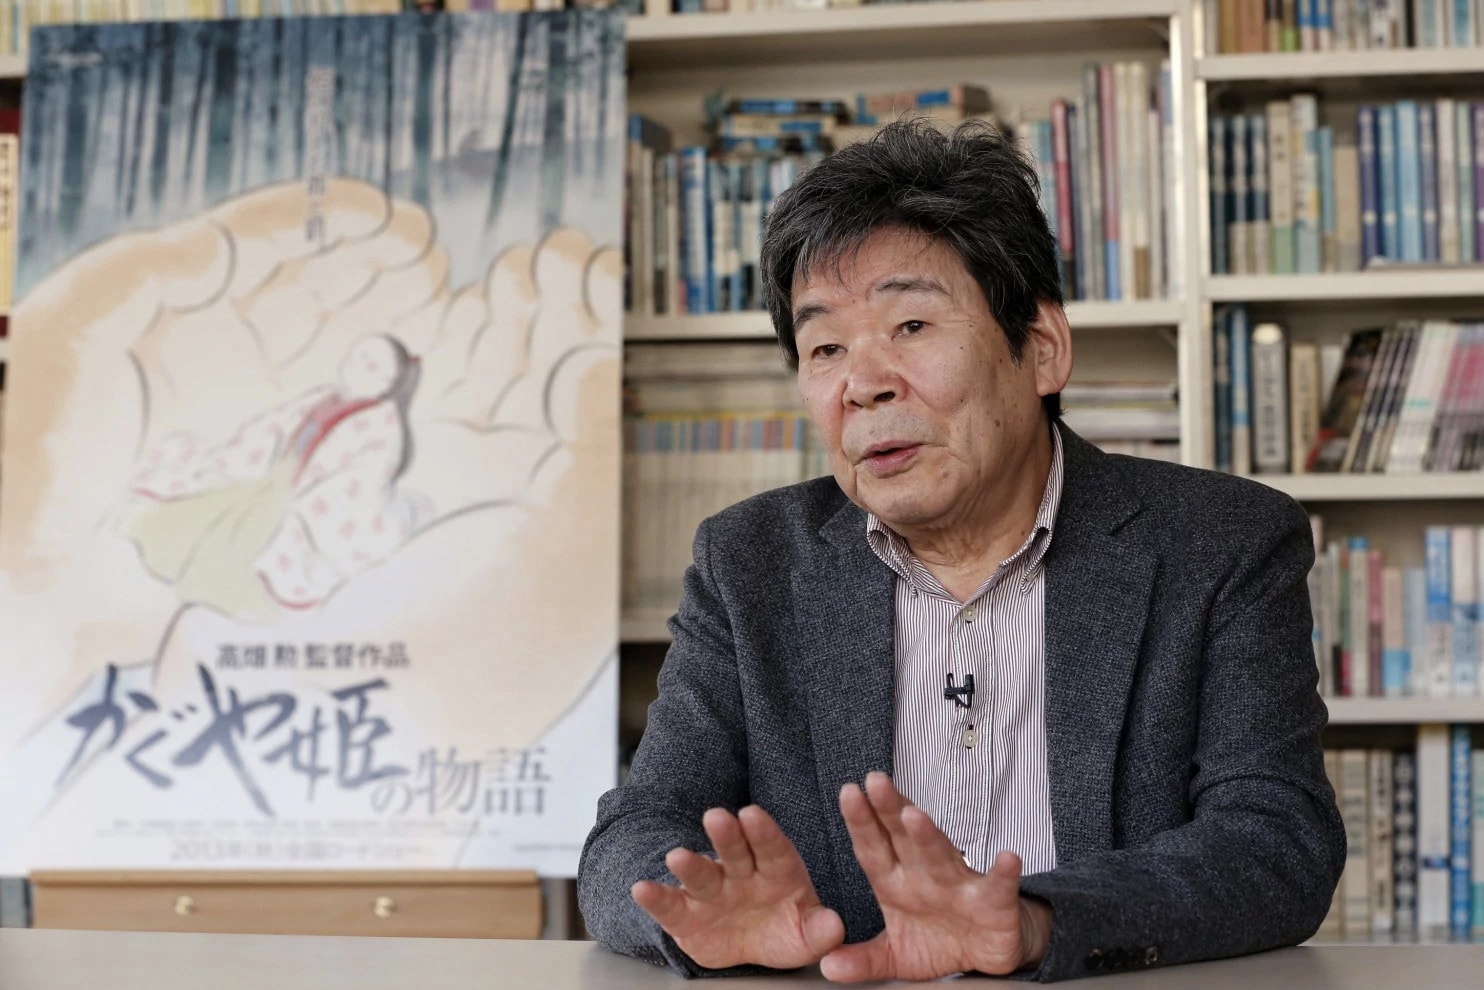 Studio Ghibli Isao Takahata Hayao Miyazaki Death Passed Away animation director producer writer movies film entertainment obituary